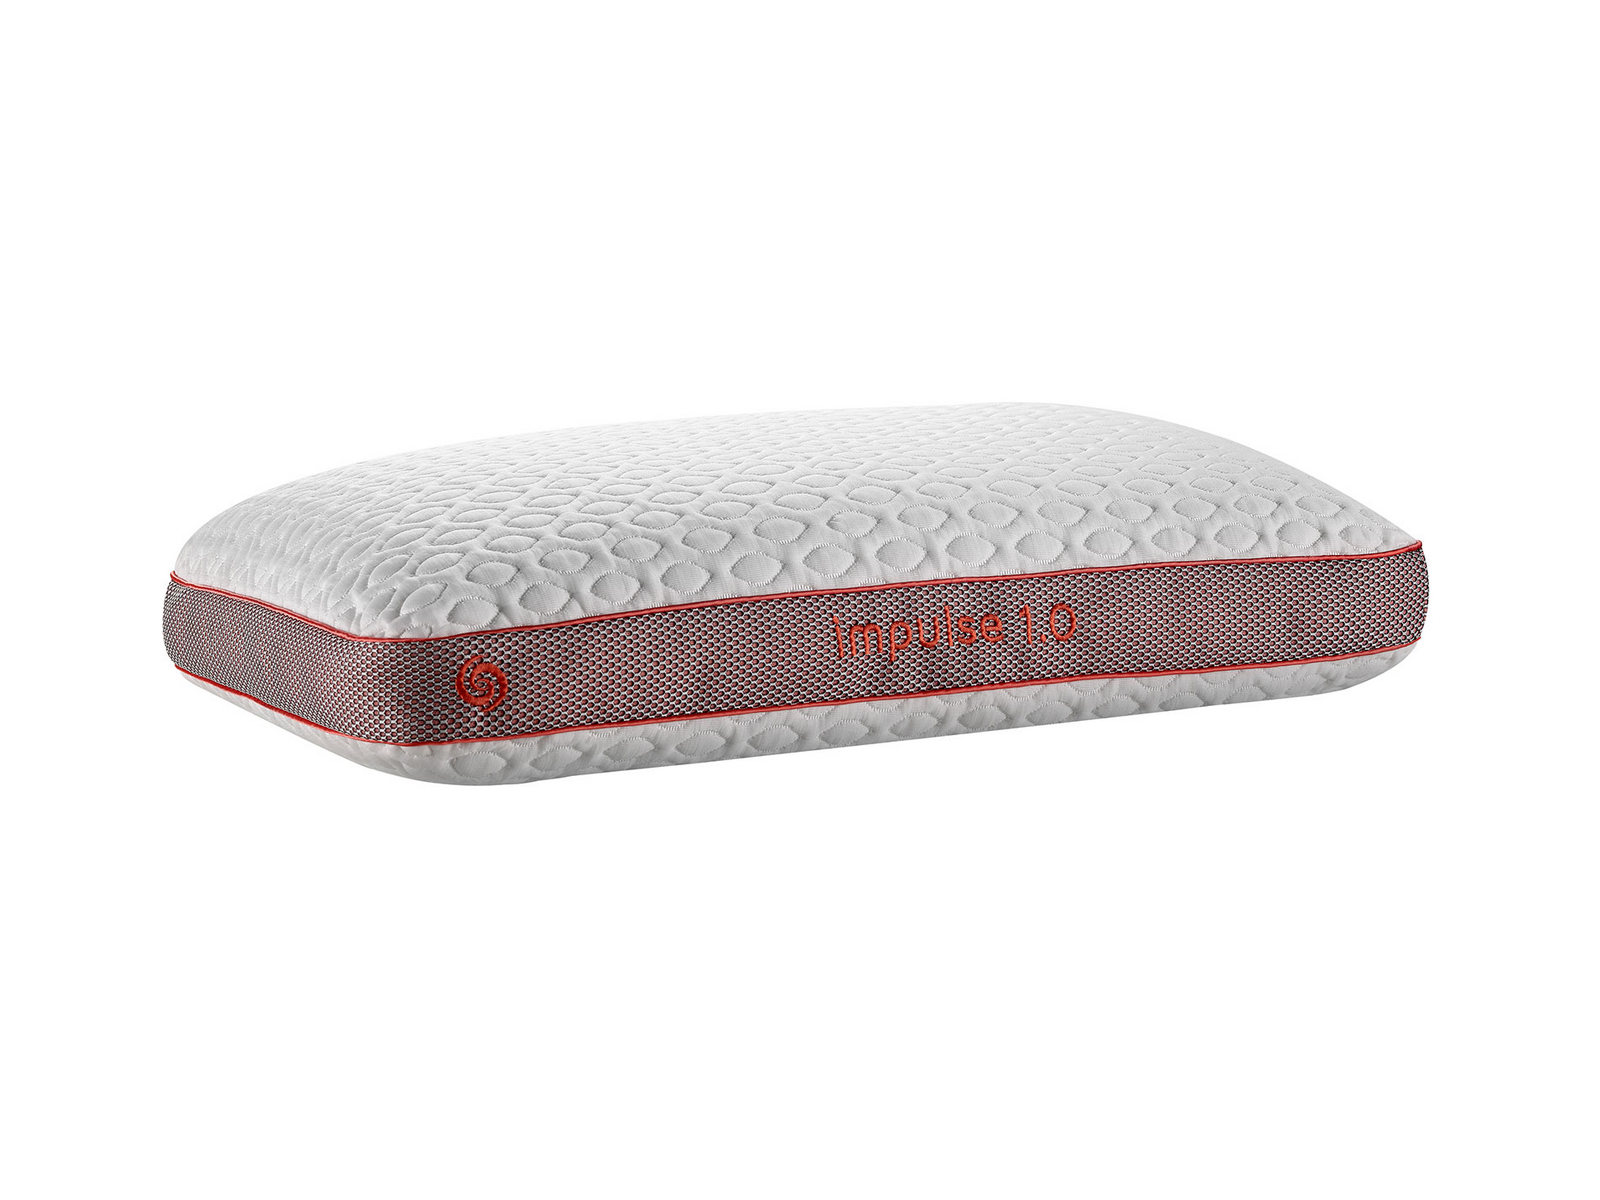 Bedgear Impulse 1.0 Pillow